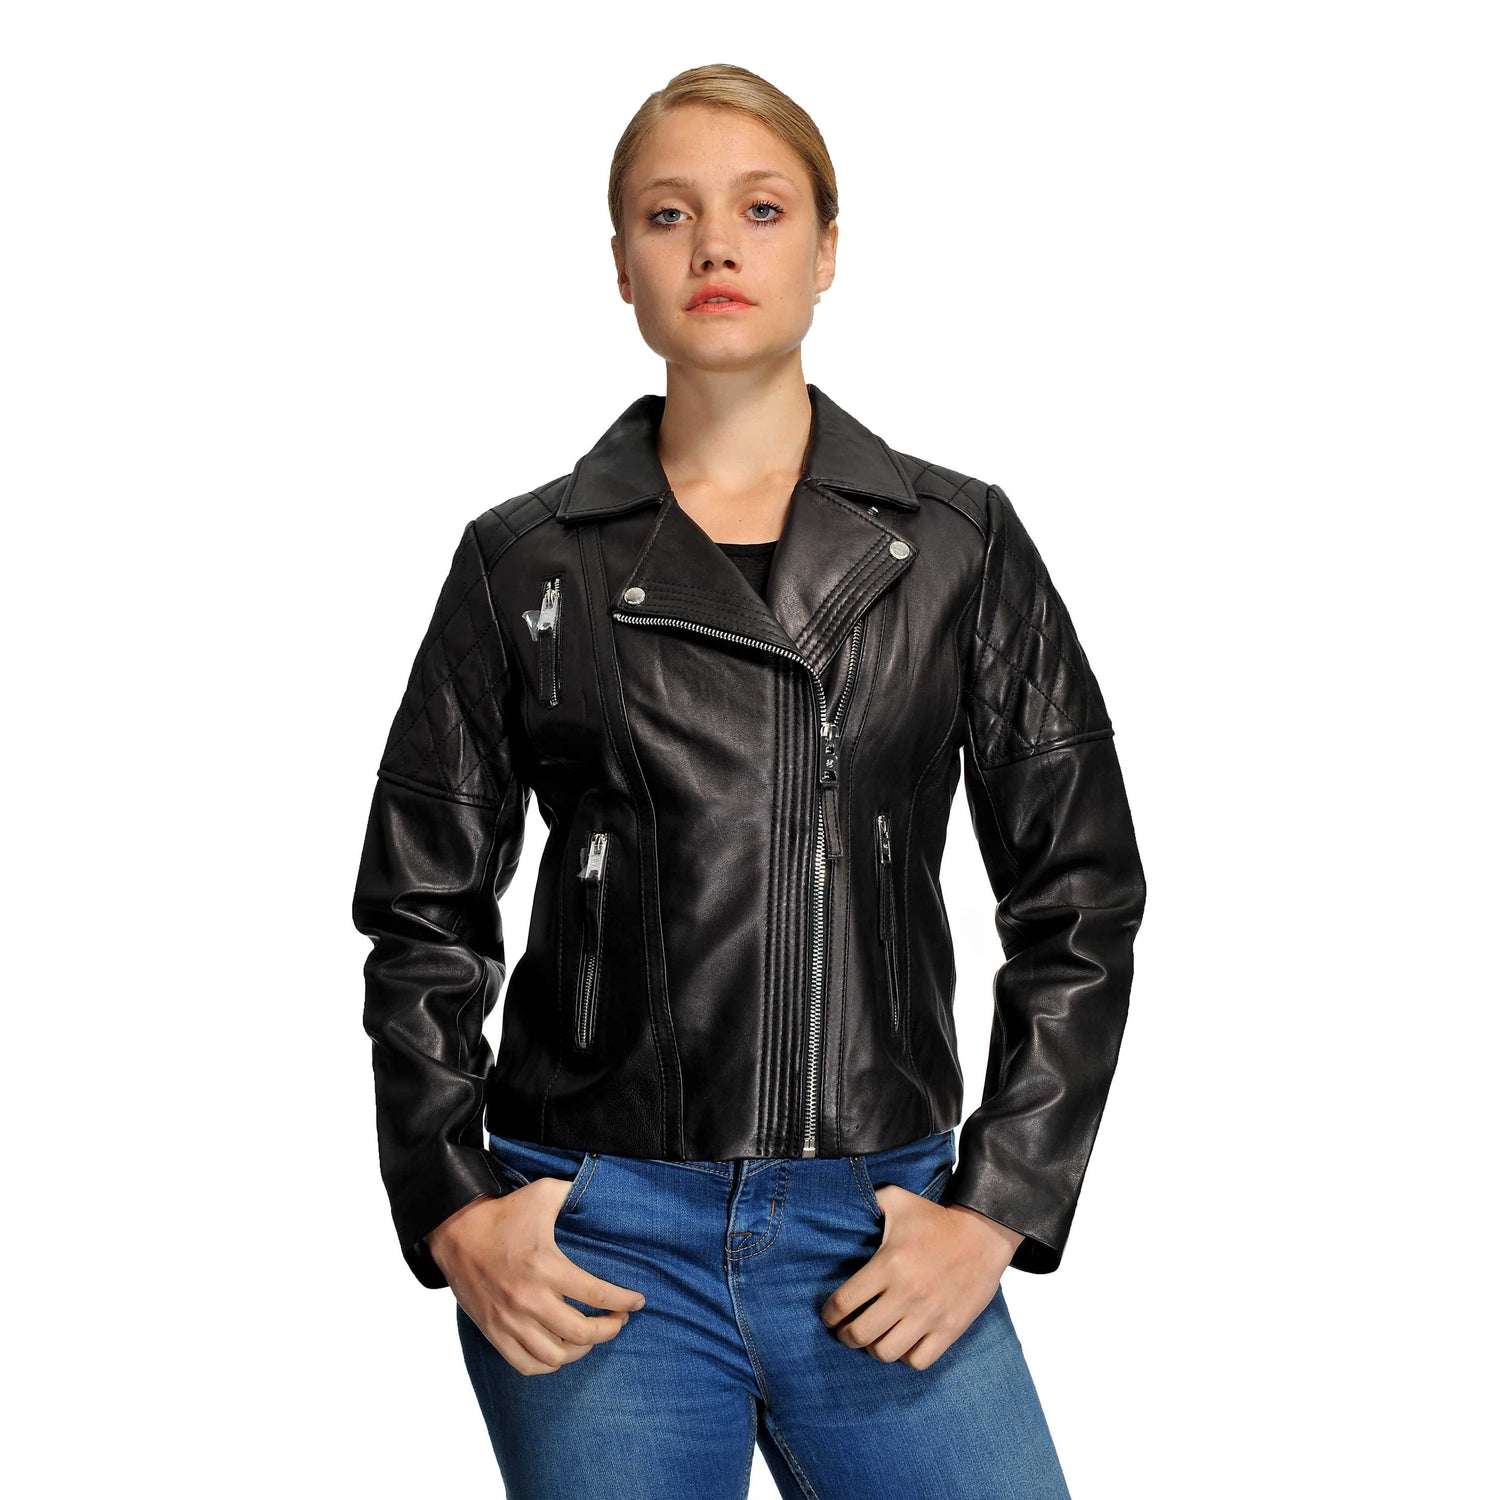 Michael Kors Leather Moto Jacket Regular  Petite Sizes  Macys